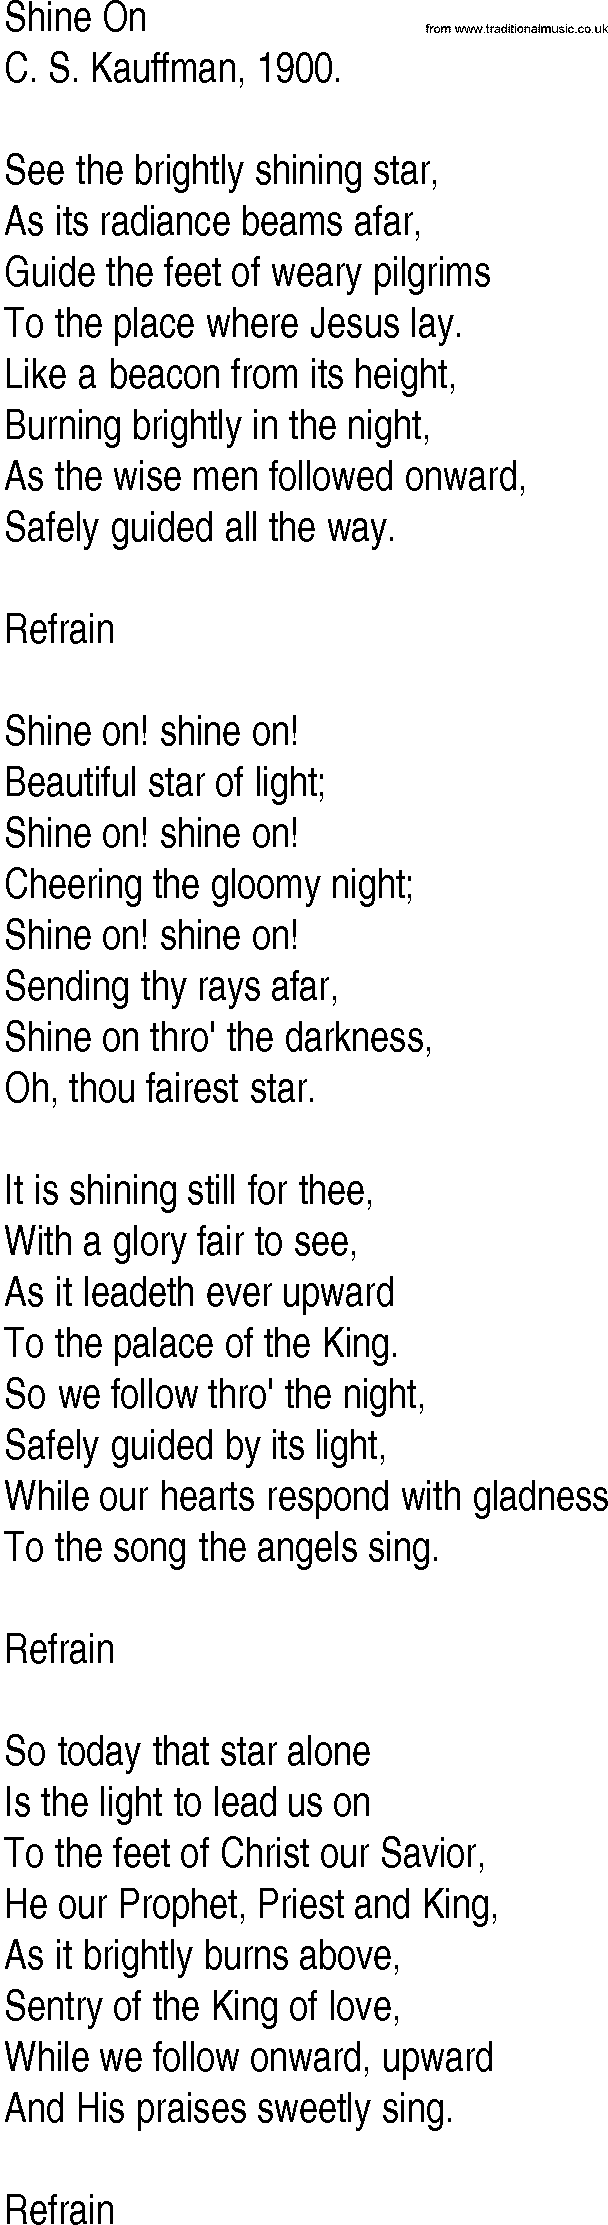 Hymn and Gospel Song: Shine On by C S Kauffman lyrics